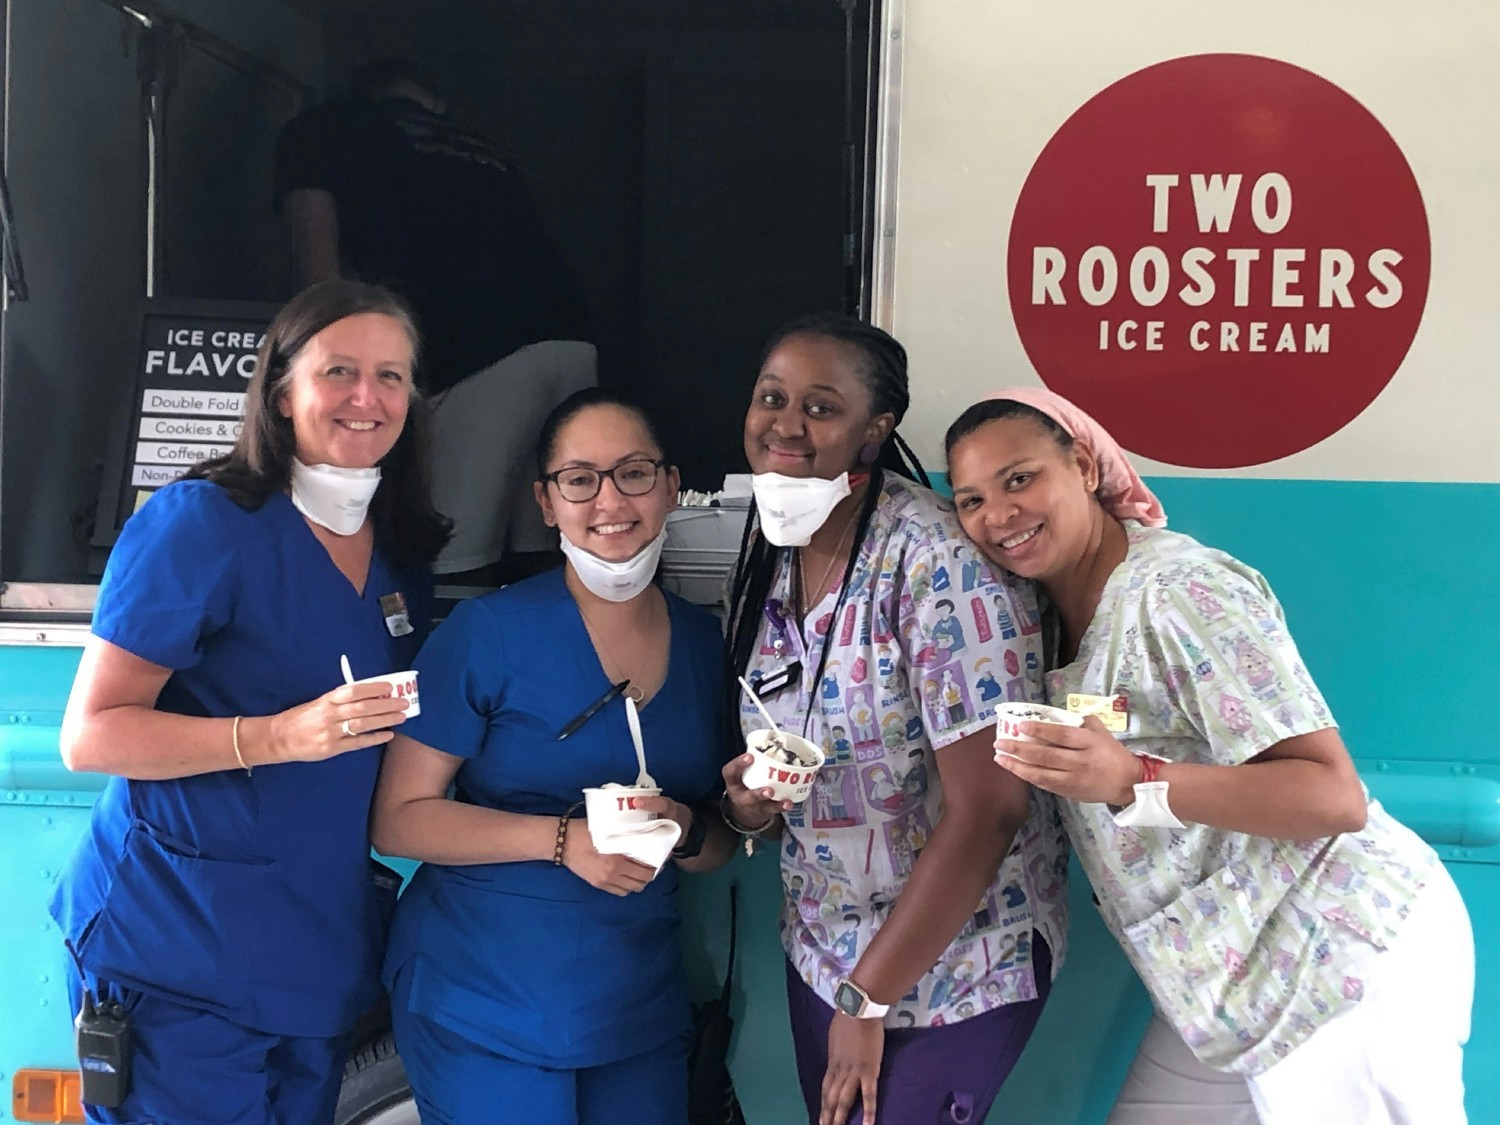 Staff enjoying an ice cream treat